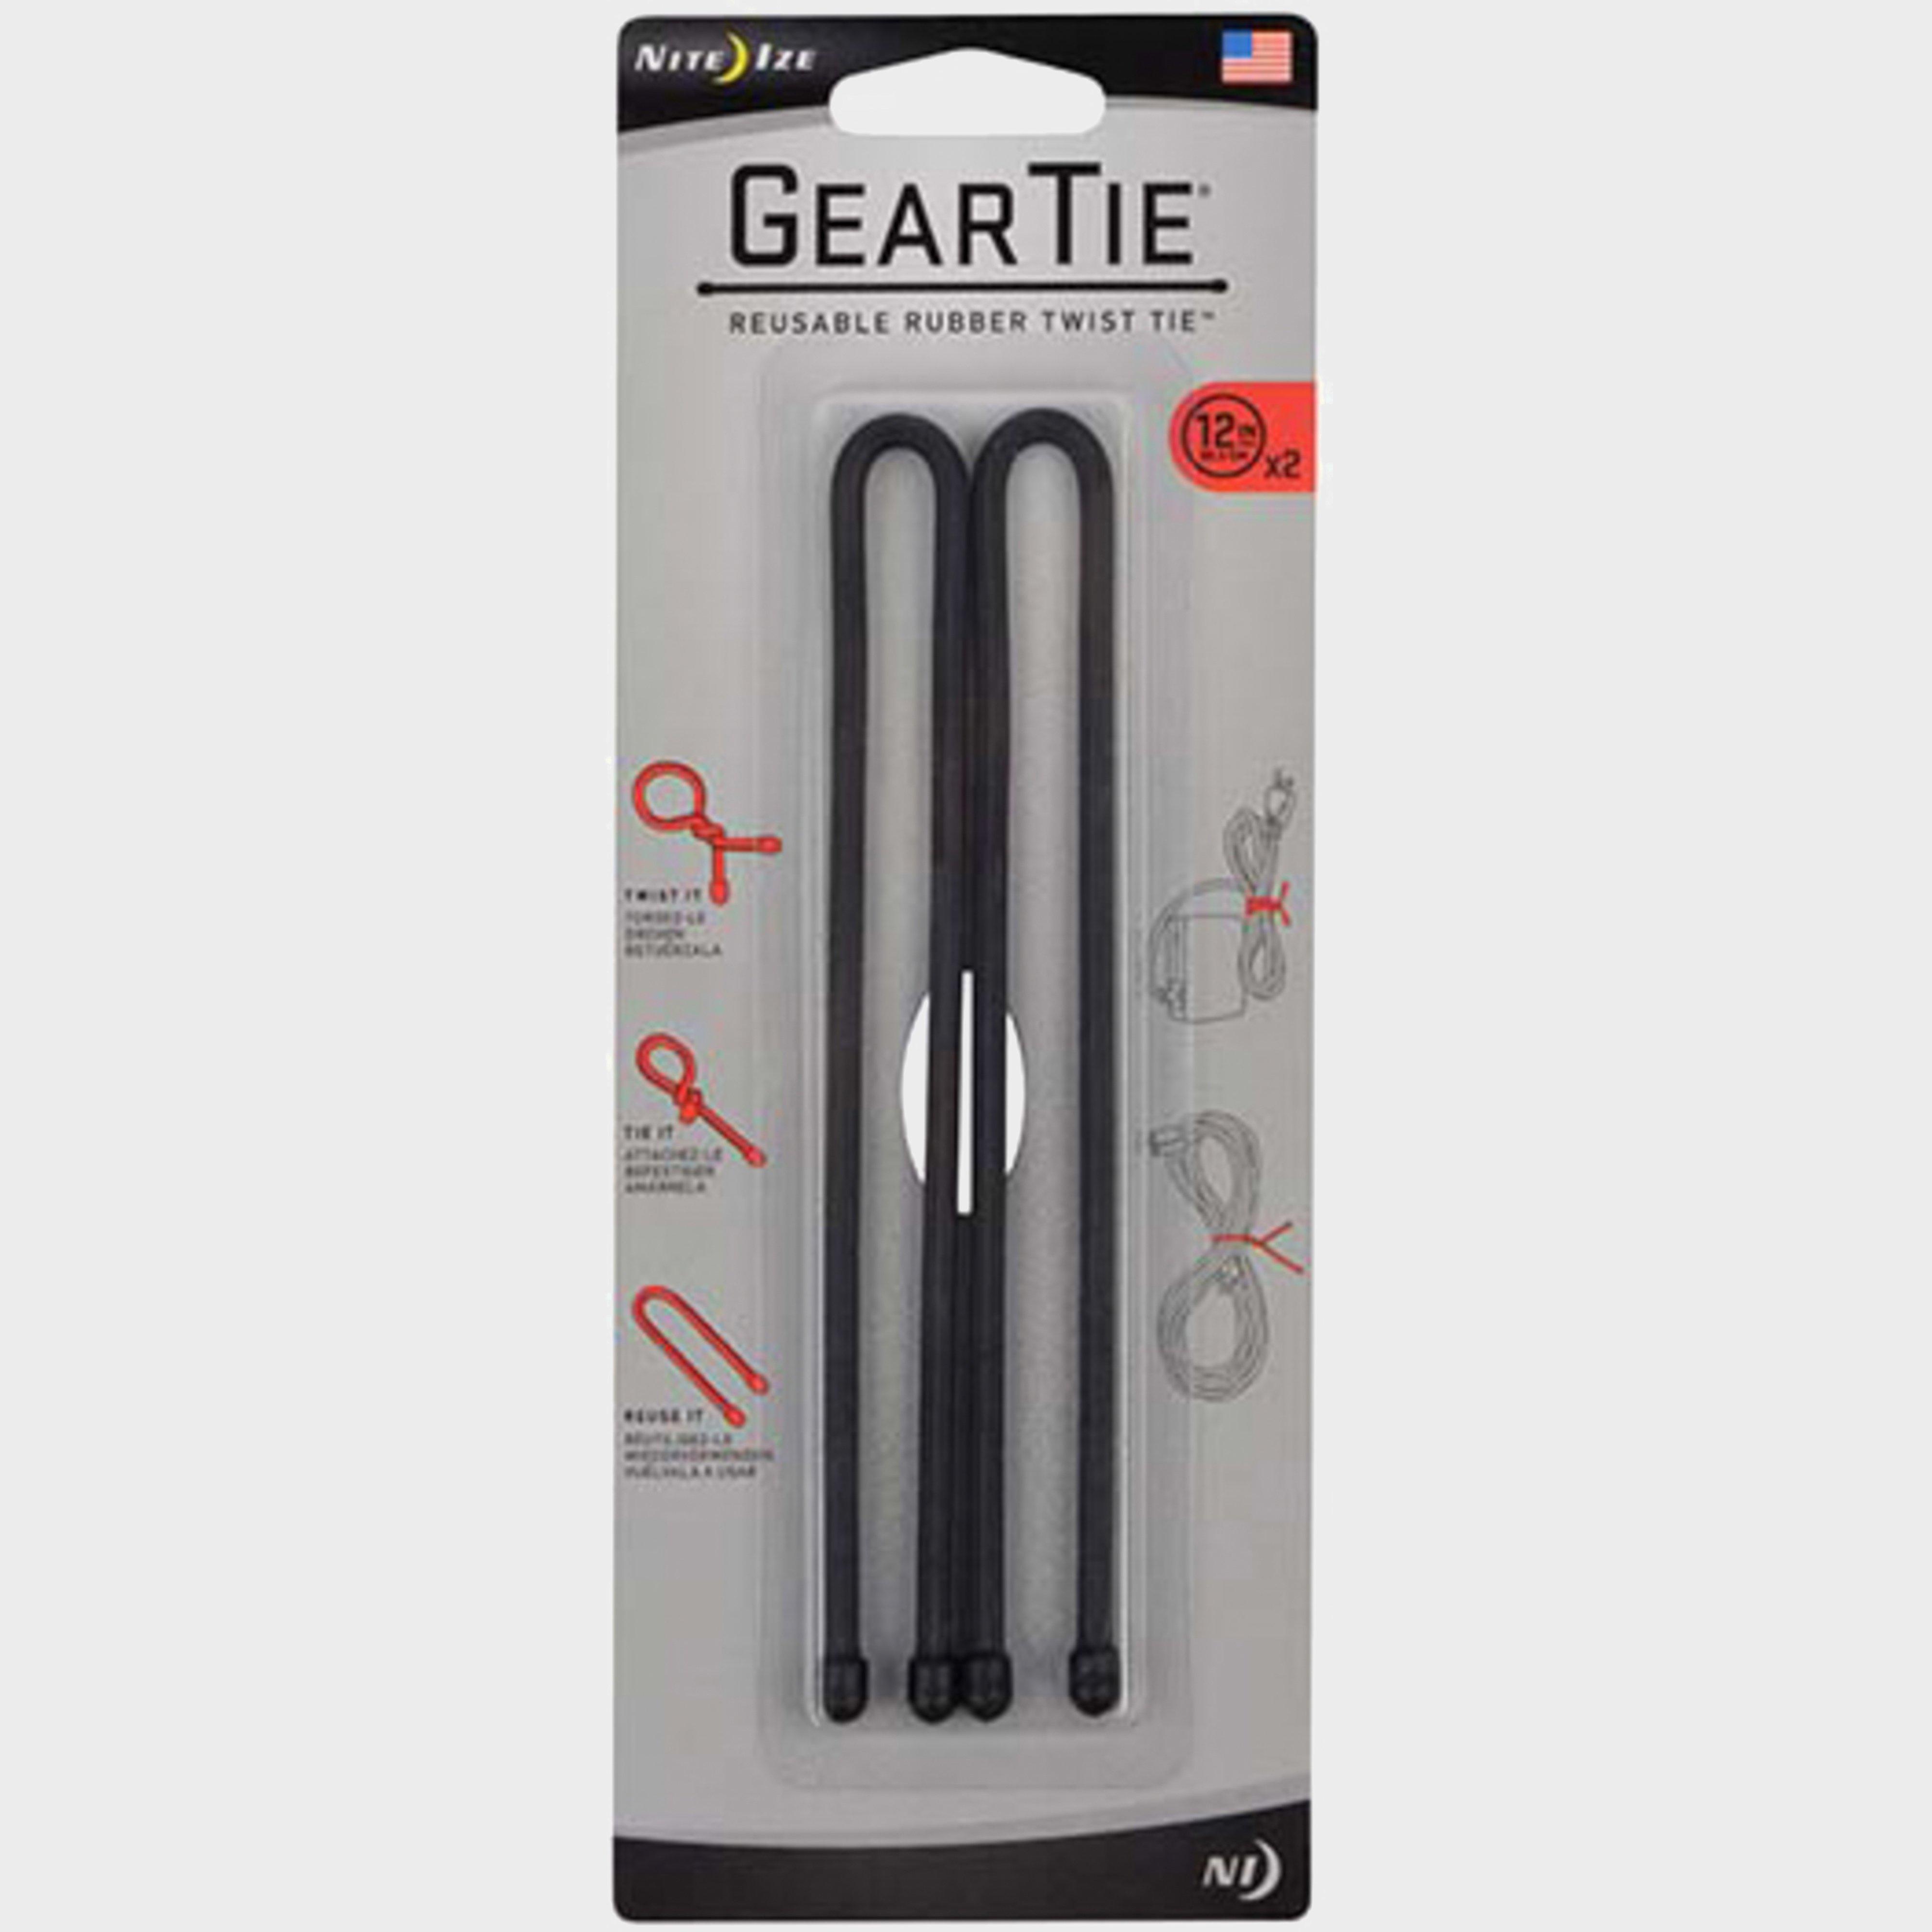 Niteize Gear Tie Reusable Rubber Twist Tie 12 (black) - Black/2pk  Black/2pk